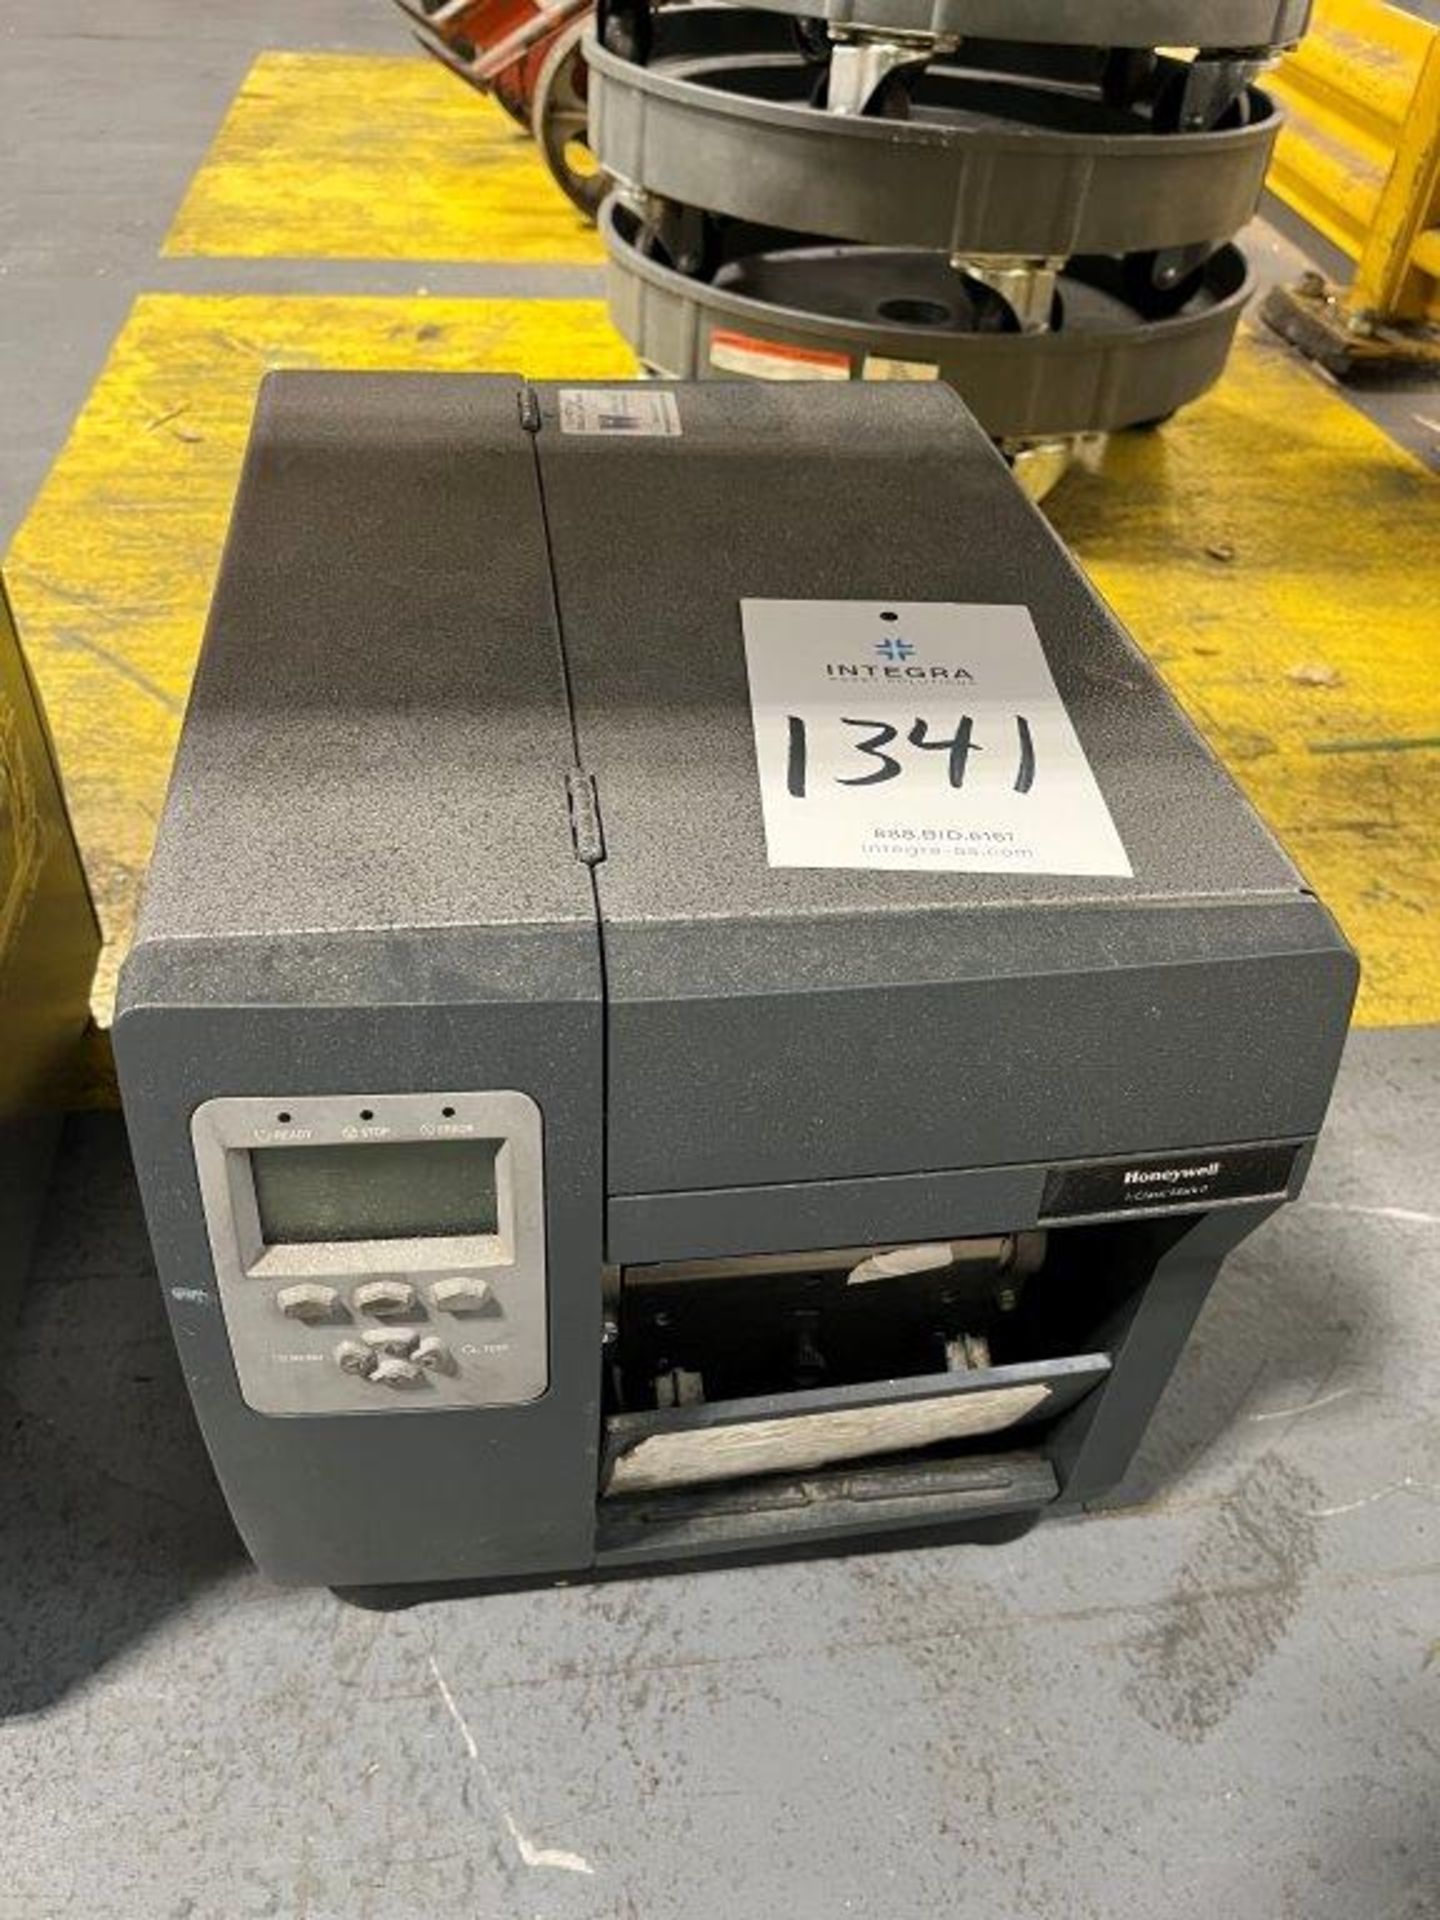 Honeywell I-Class Mark II Label Printer